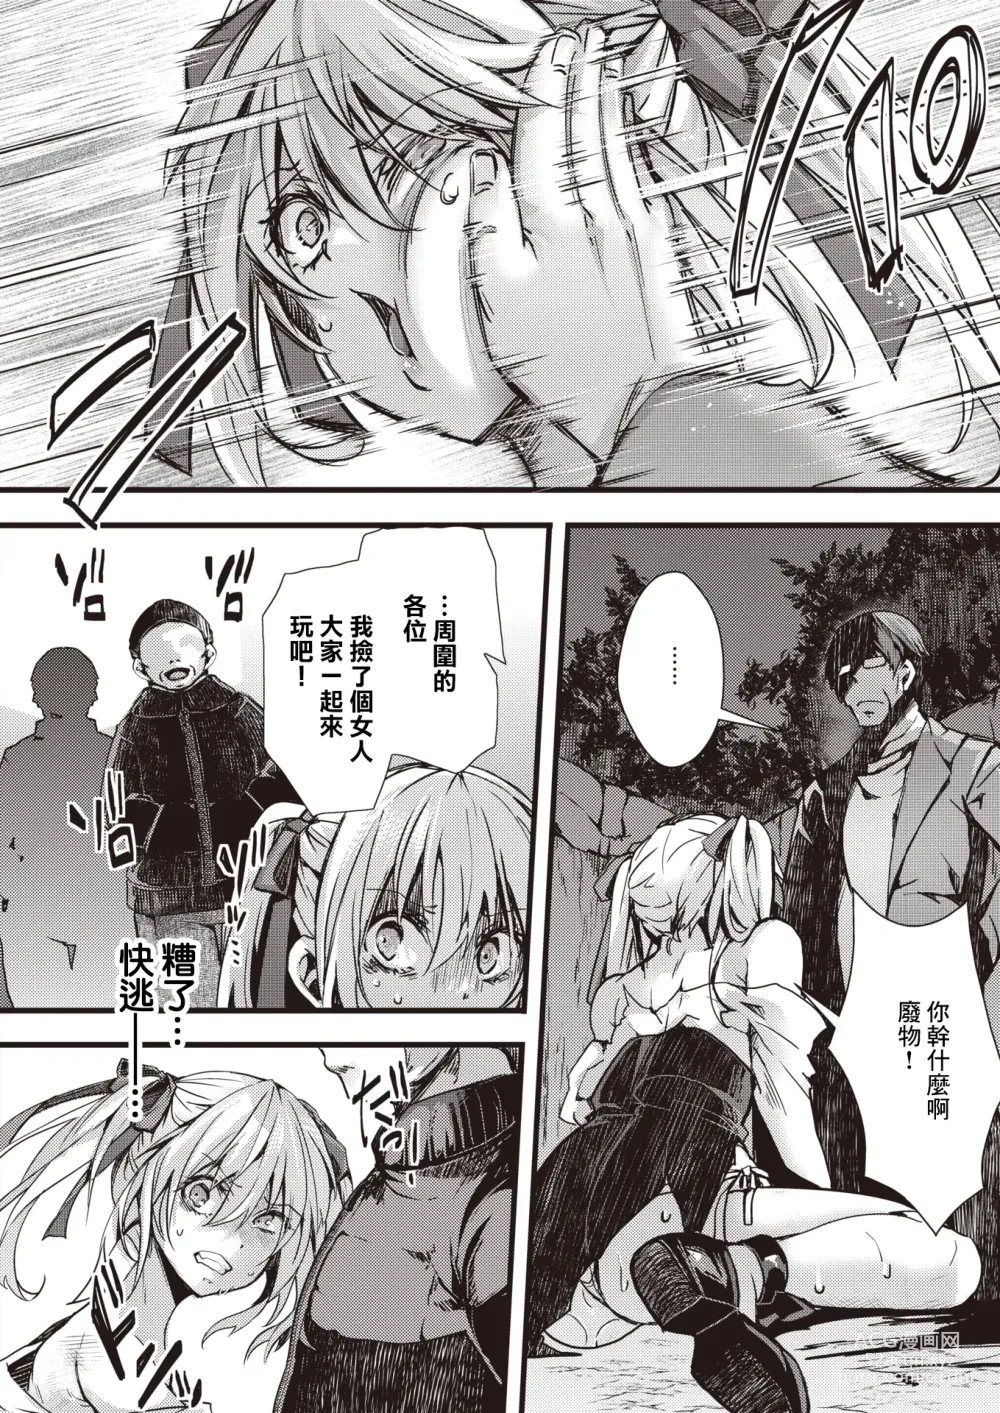 Page 2 of manga Itadaki Joou Mimi-chan vs Kouen Sumi Oji Rengou